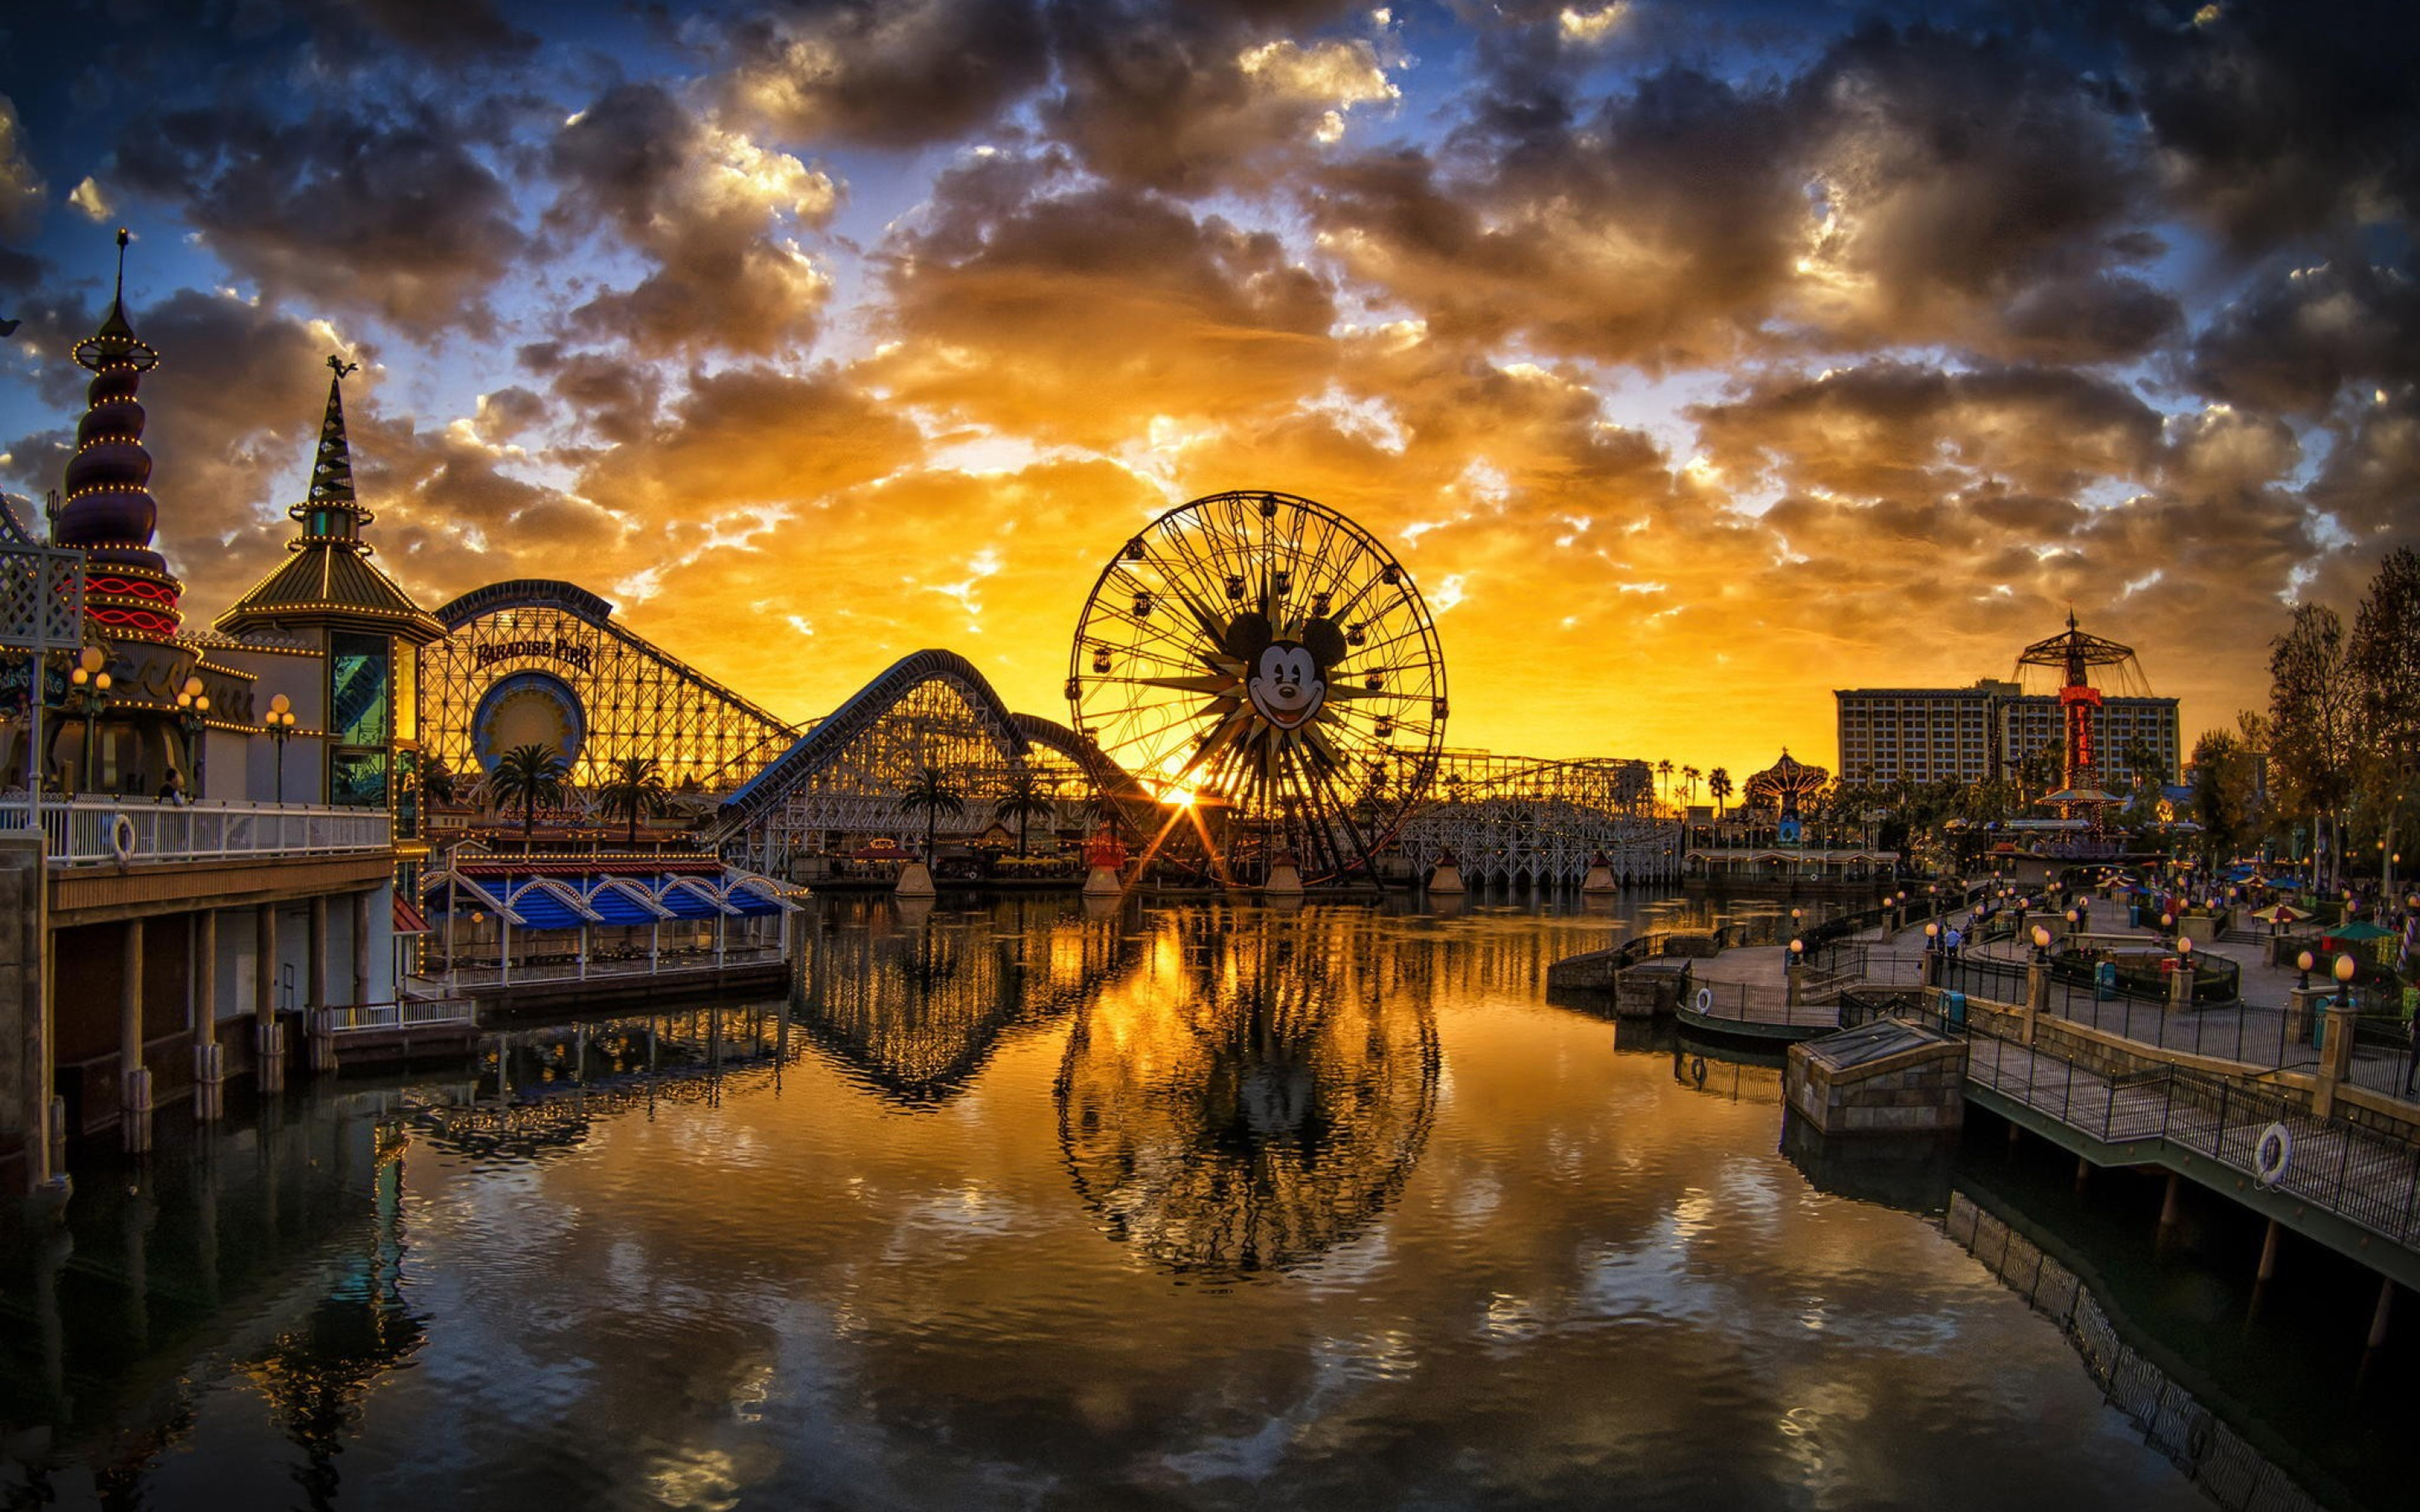 Disneyland California Sunset City River Ferris Wheel Reflection Pier Hd Wallpapers And